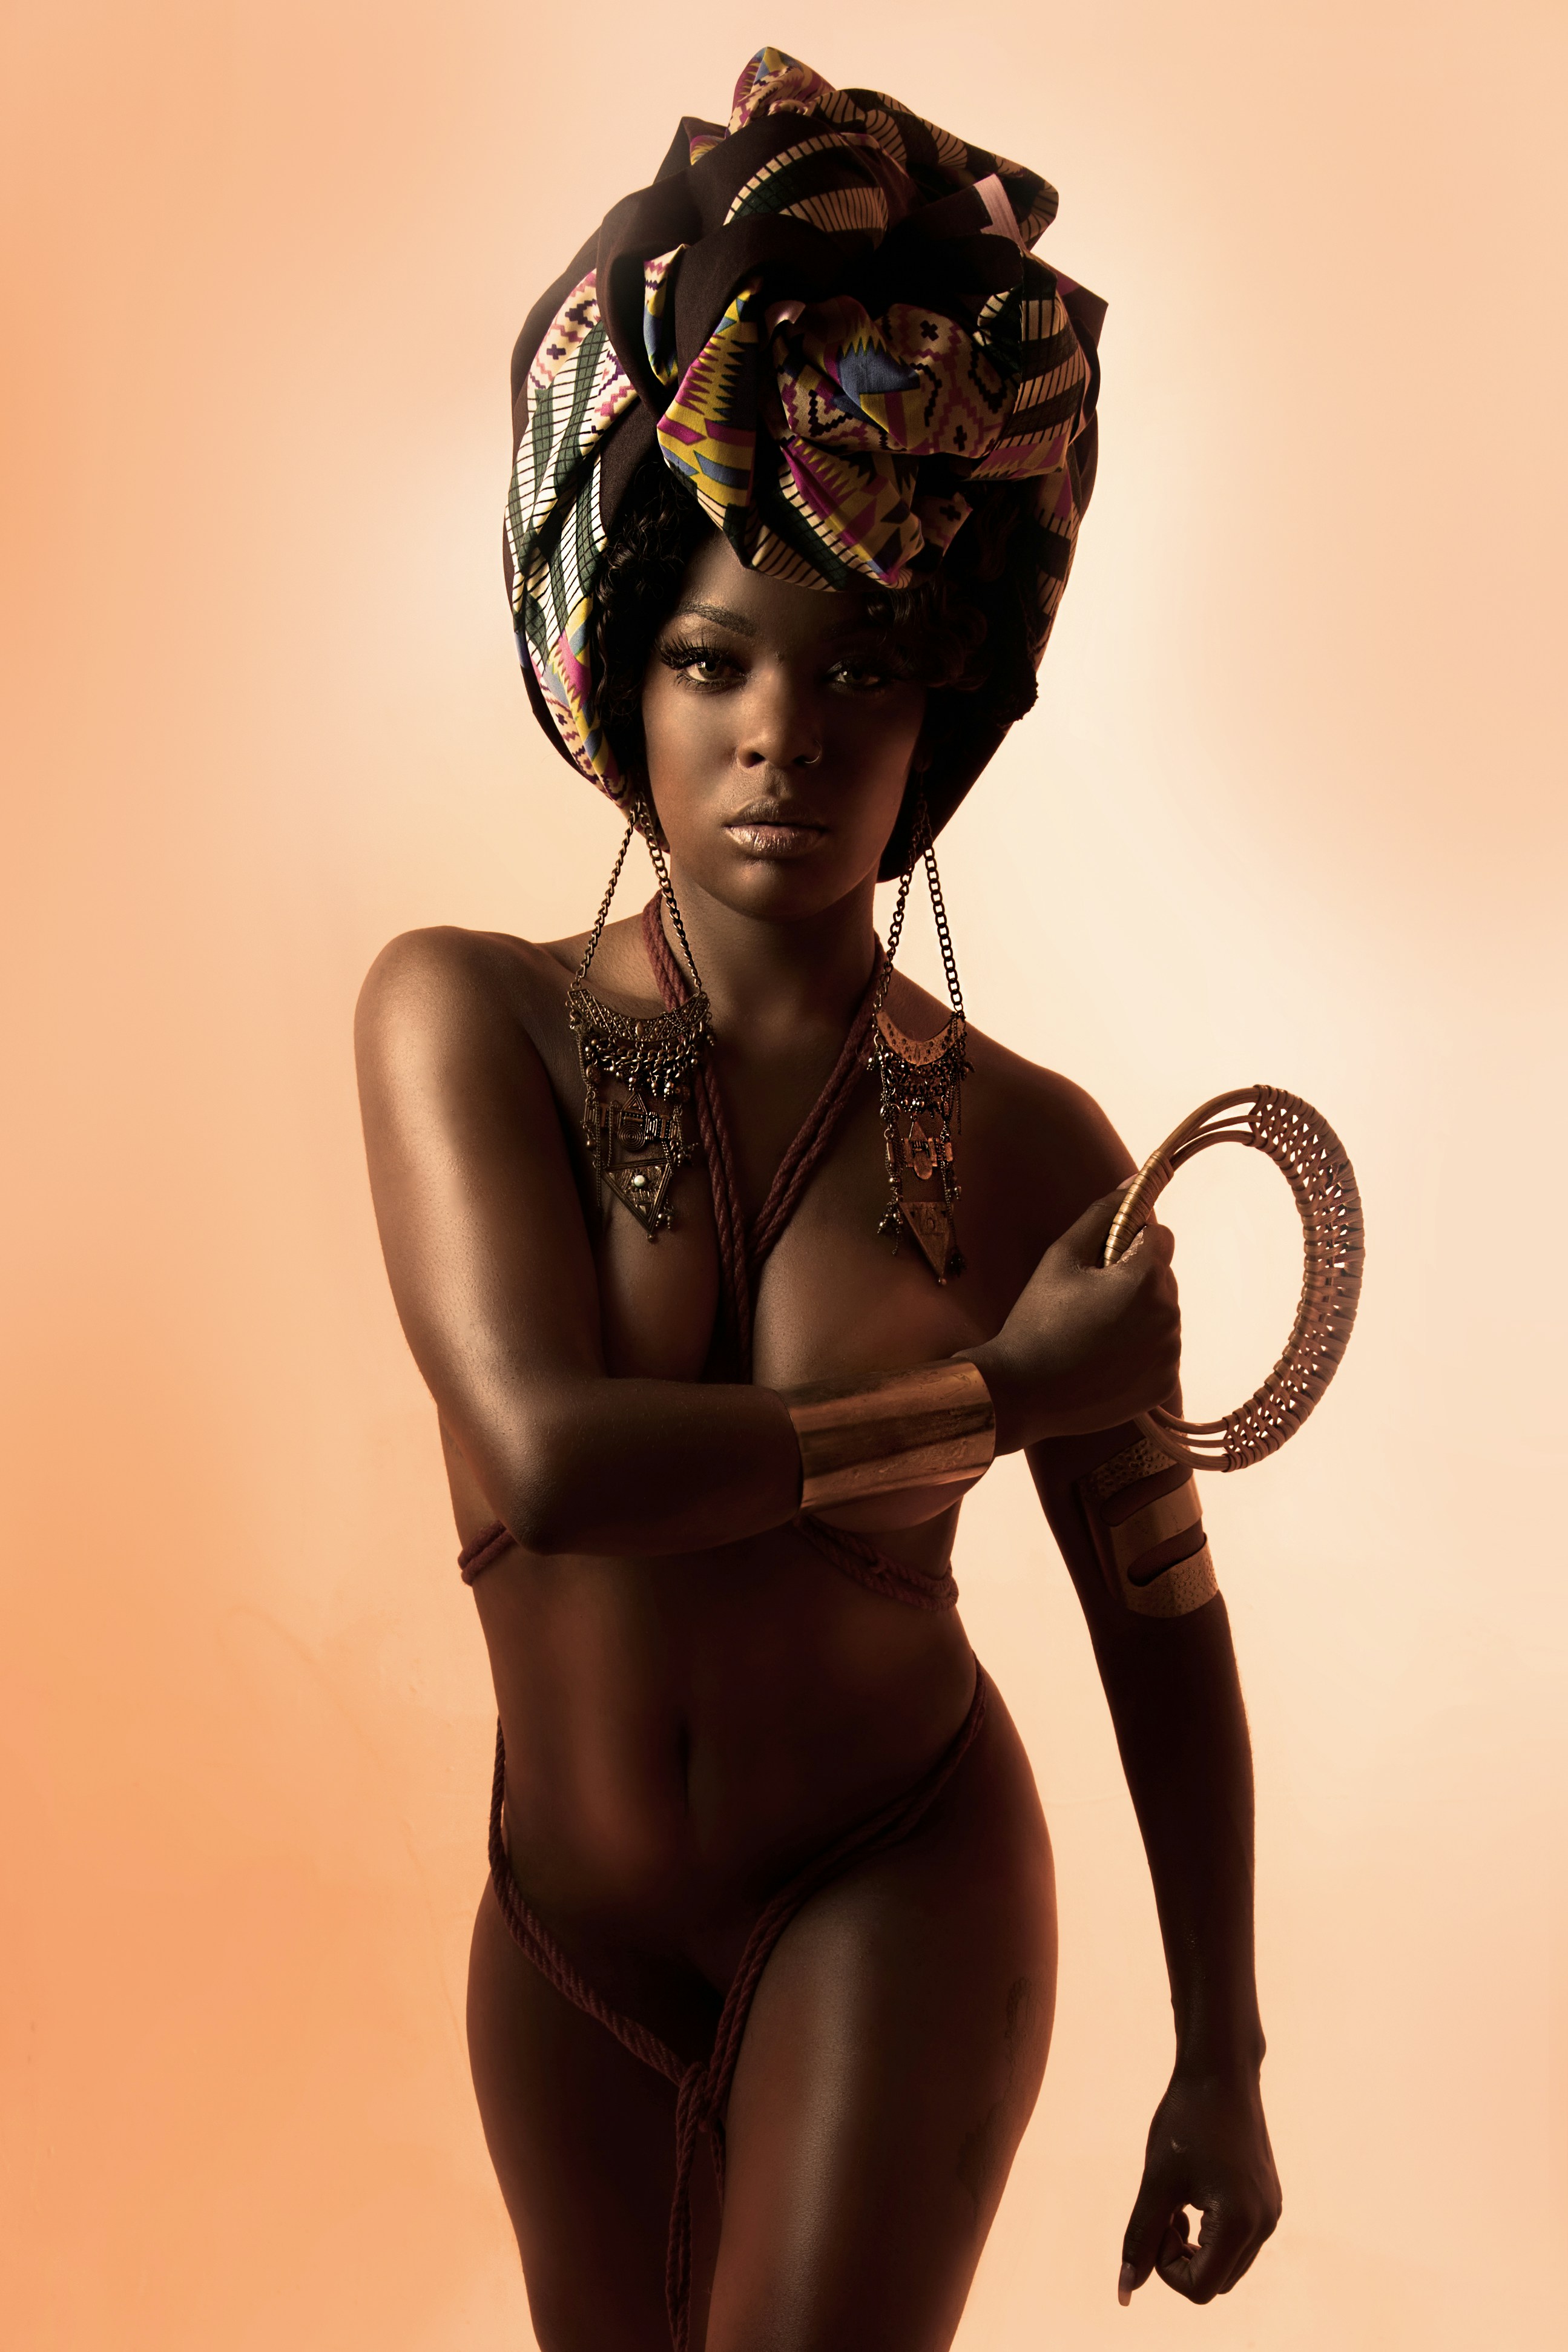 Black Woman Naked